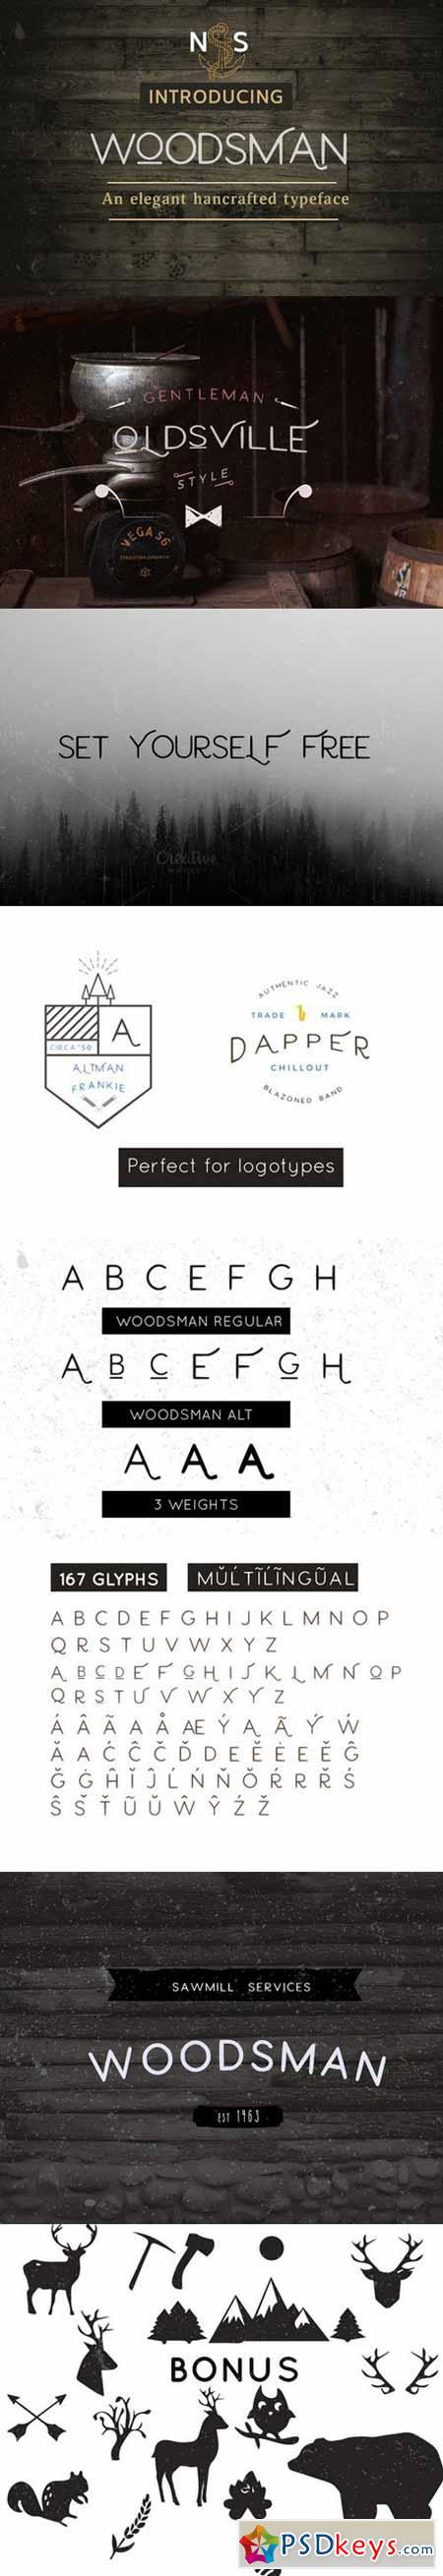 Woodsman Typeface 537530